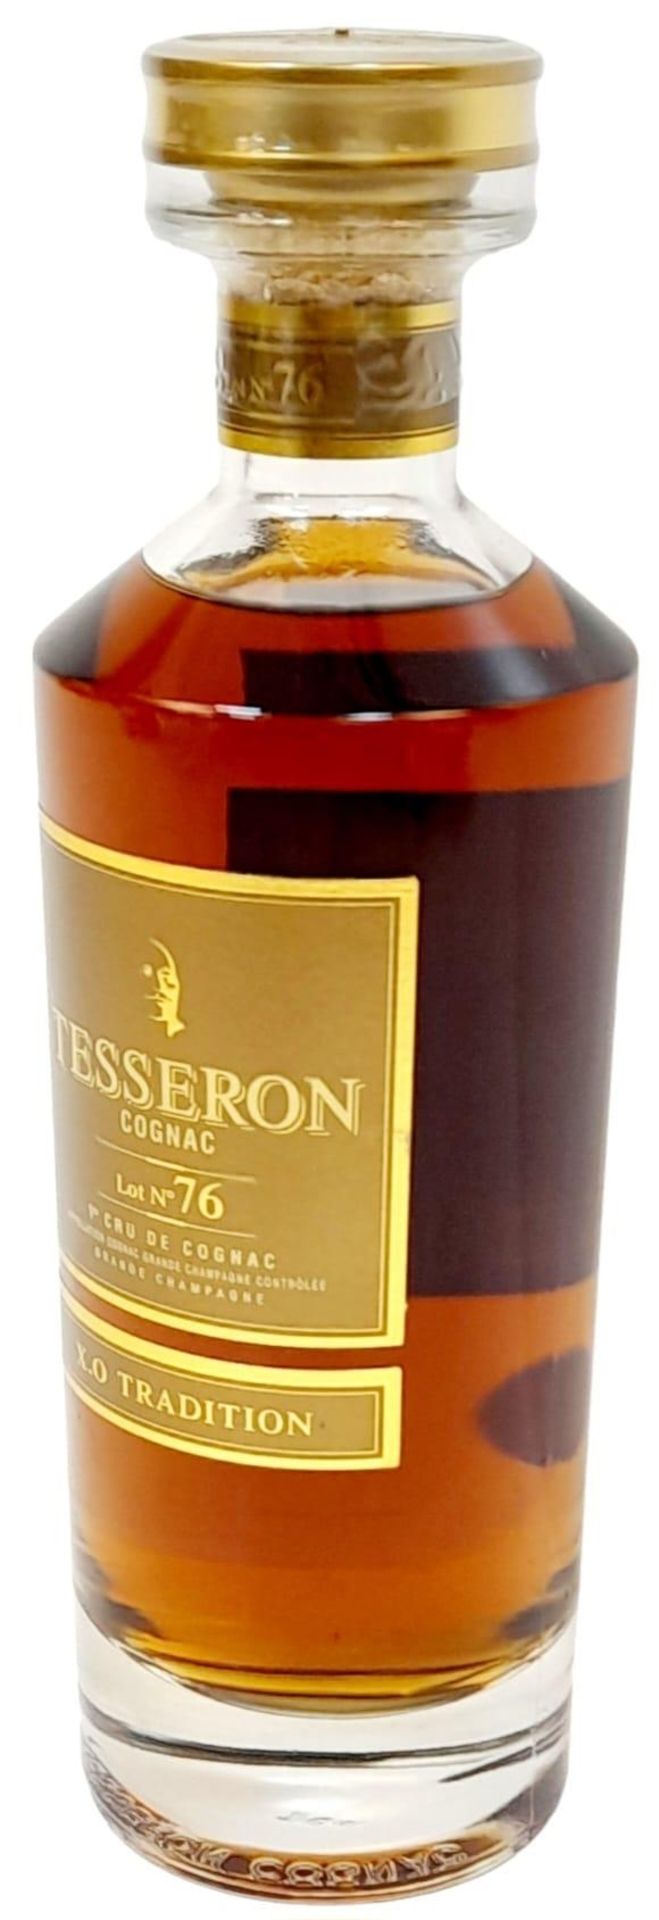 An Unopened, Sealed, Limited Edition Tesseron Cognac Lot No 76 1st Cru de Cognac XO Tradition. - Image 2 of 5